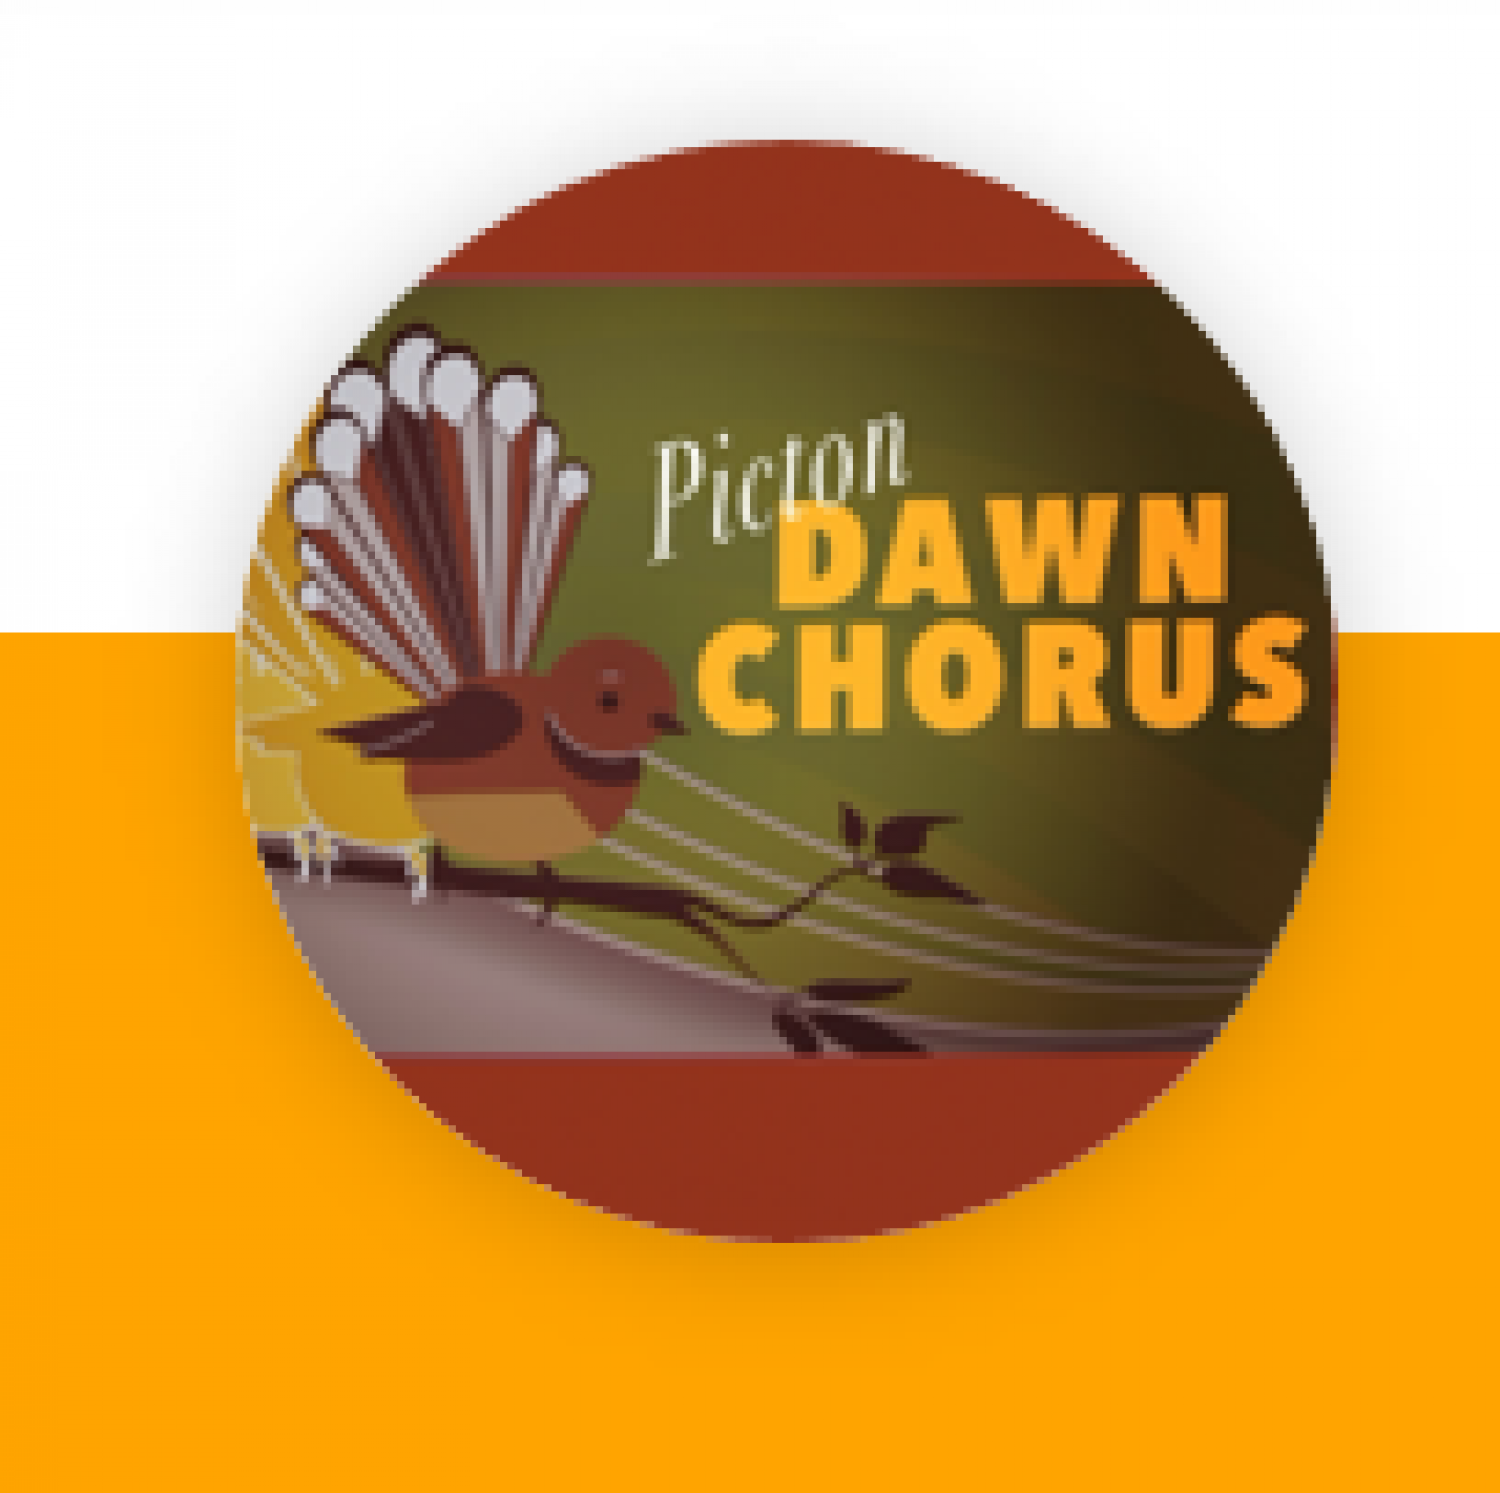 Picton Dawn Chorus